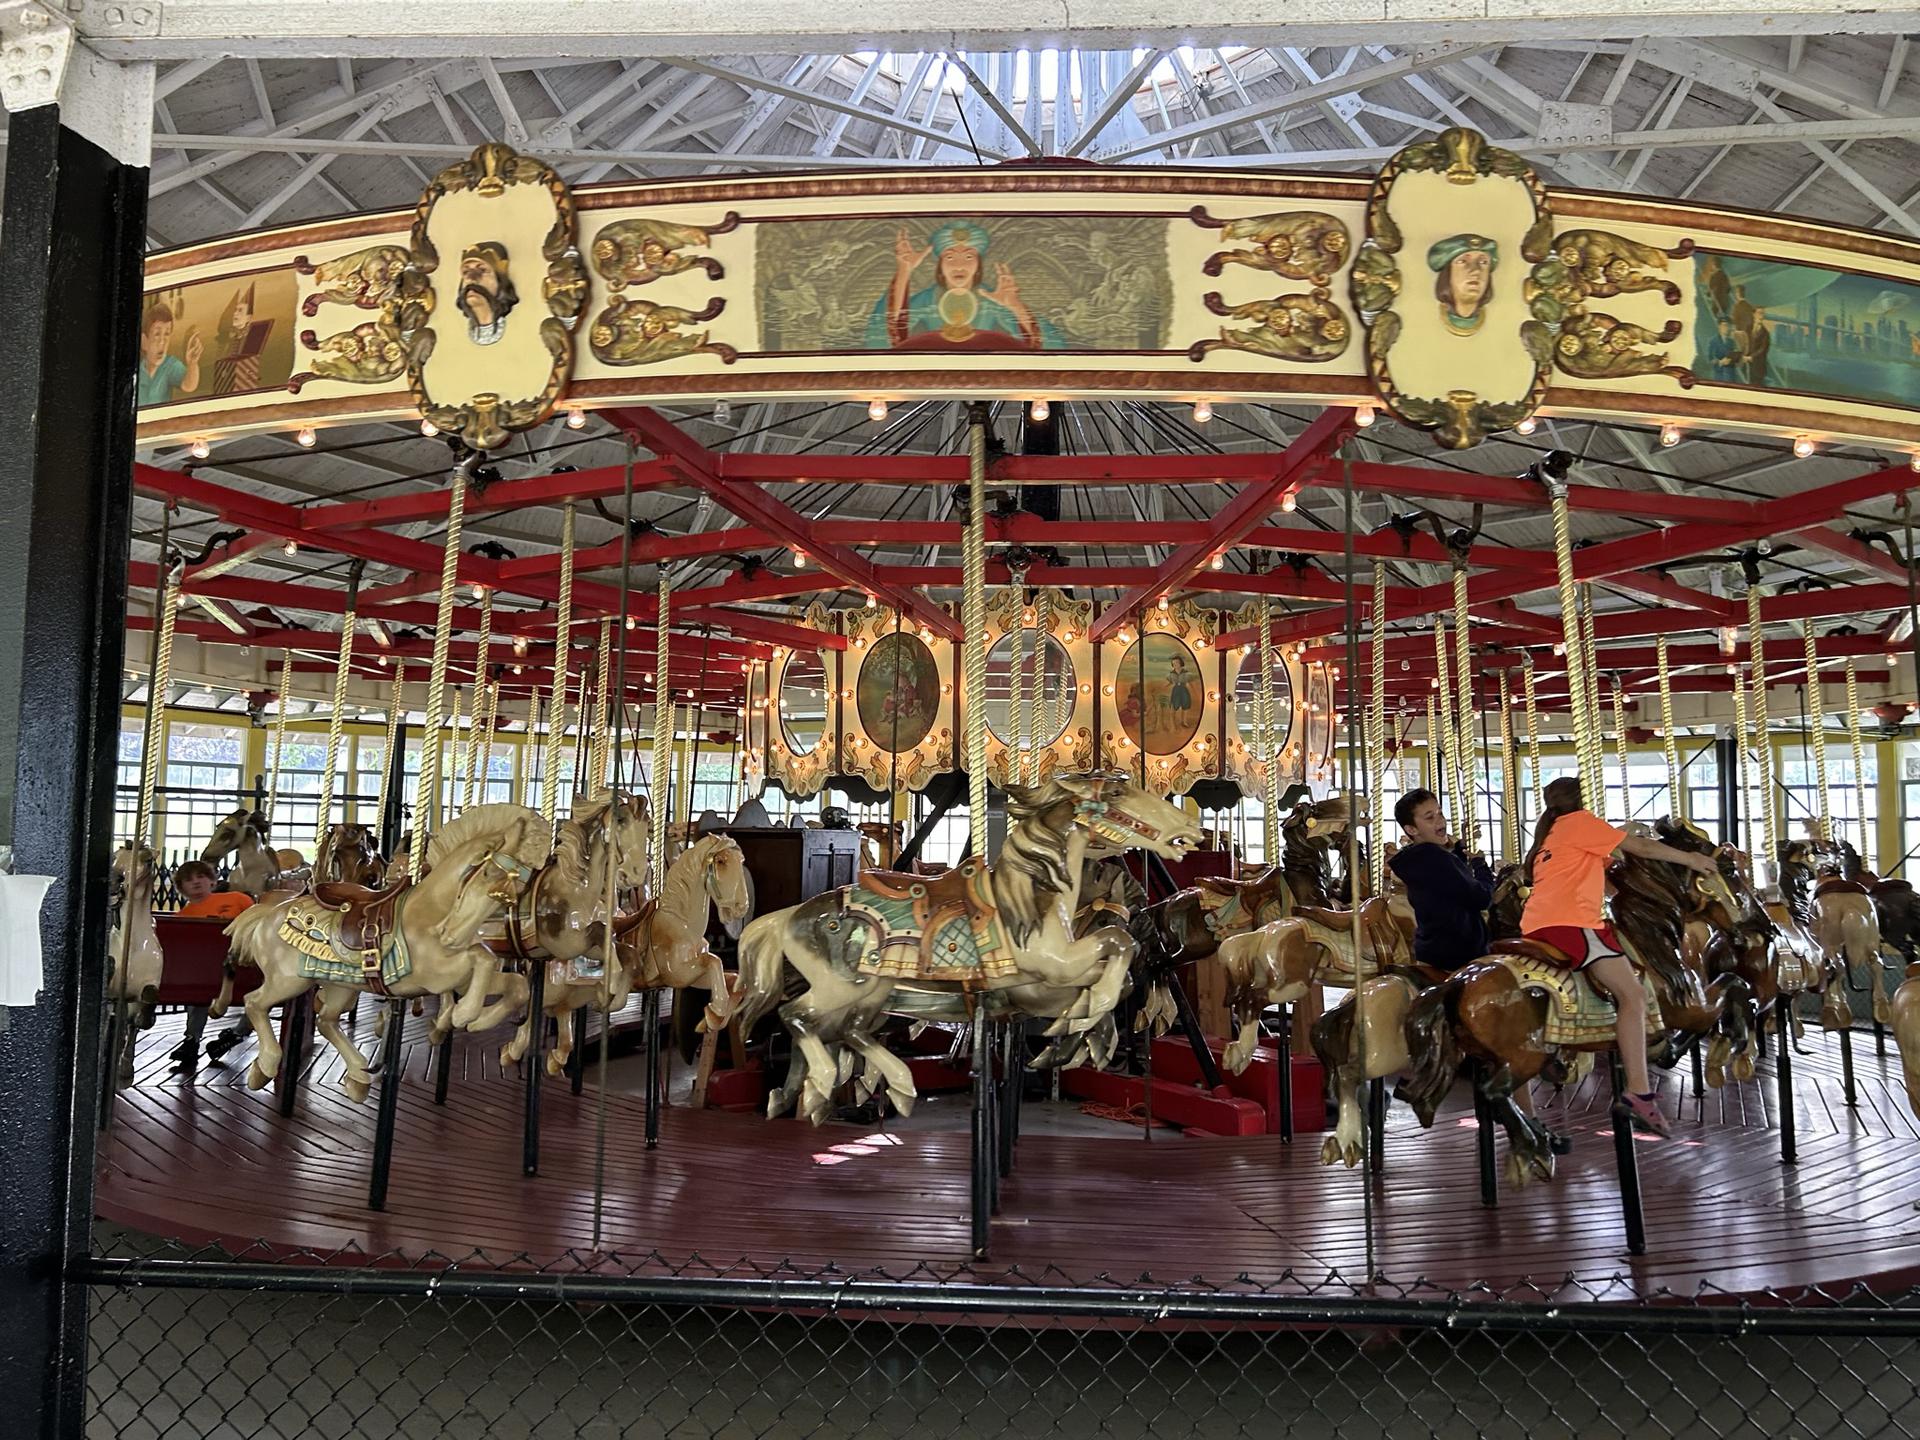 A Carousel in Binghamton